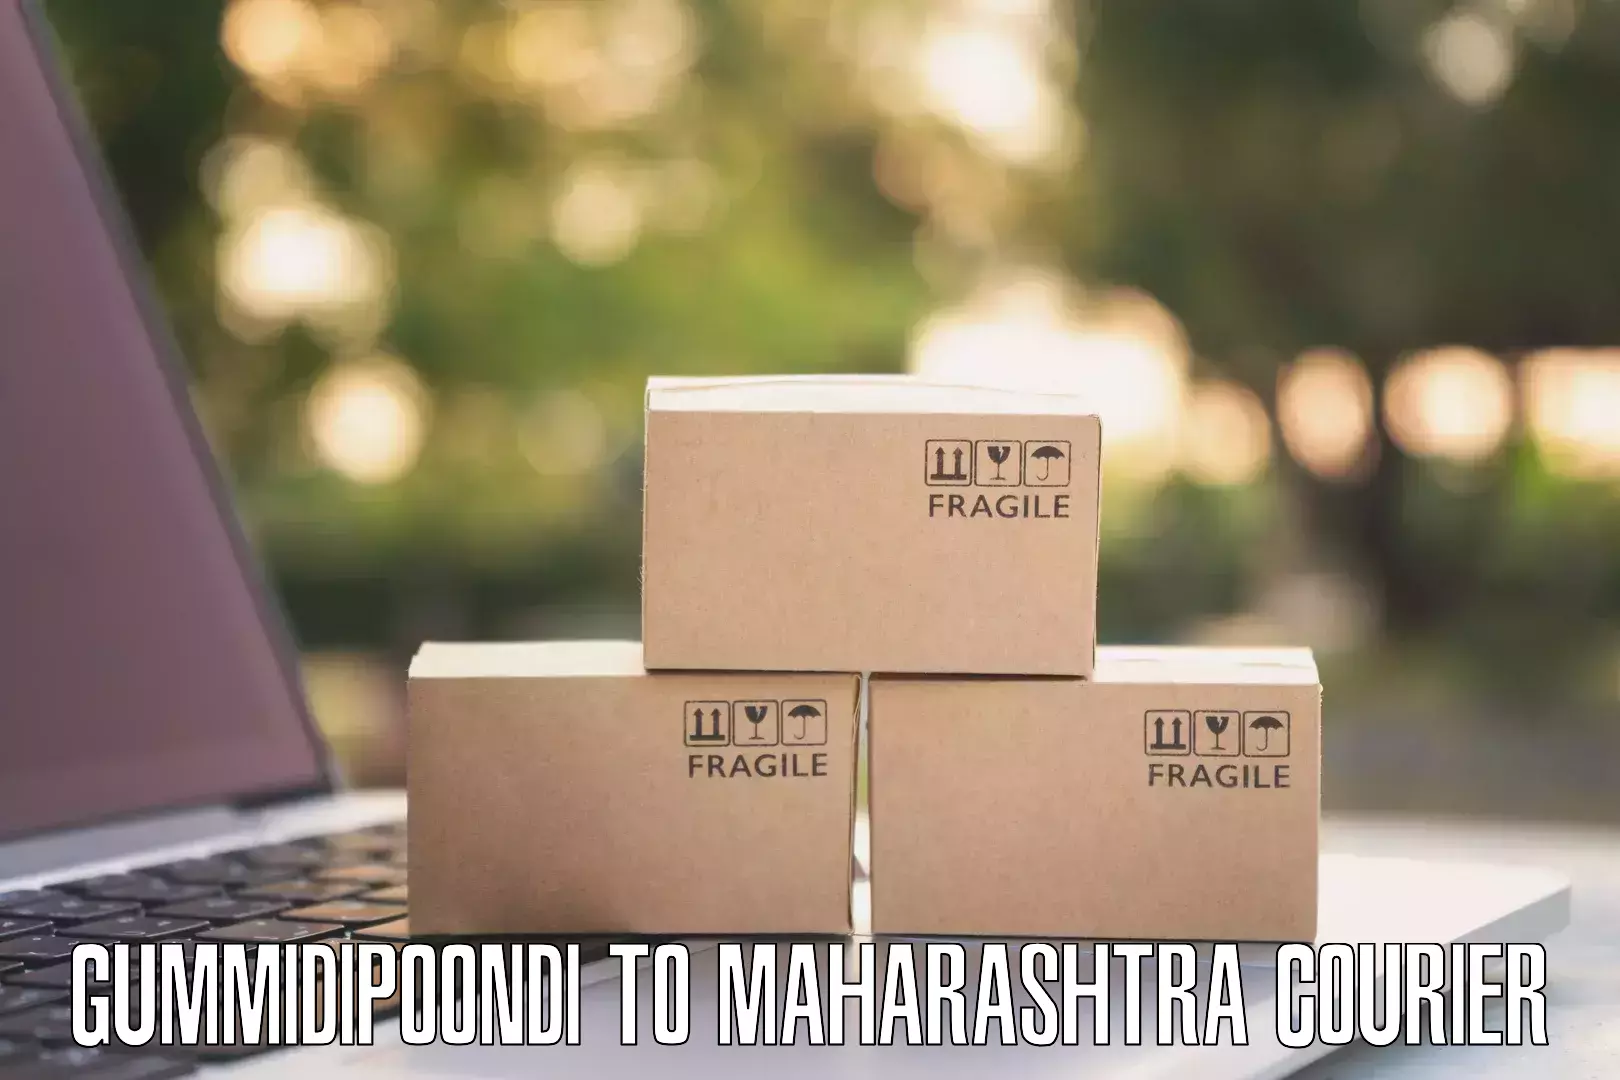 Digital shipping tools in Gummidipoondi to Maharashtra